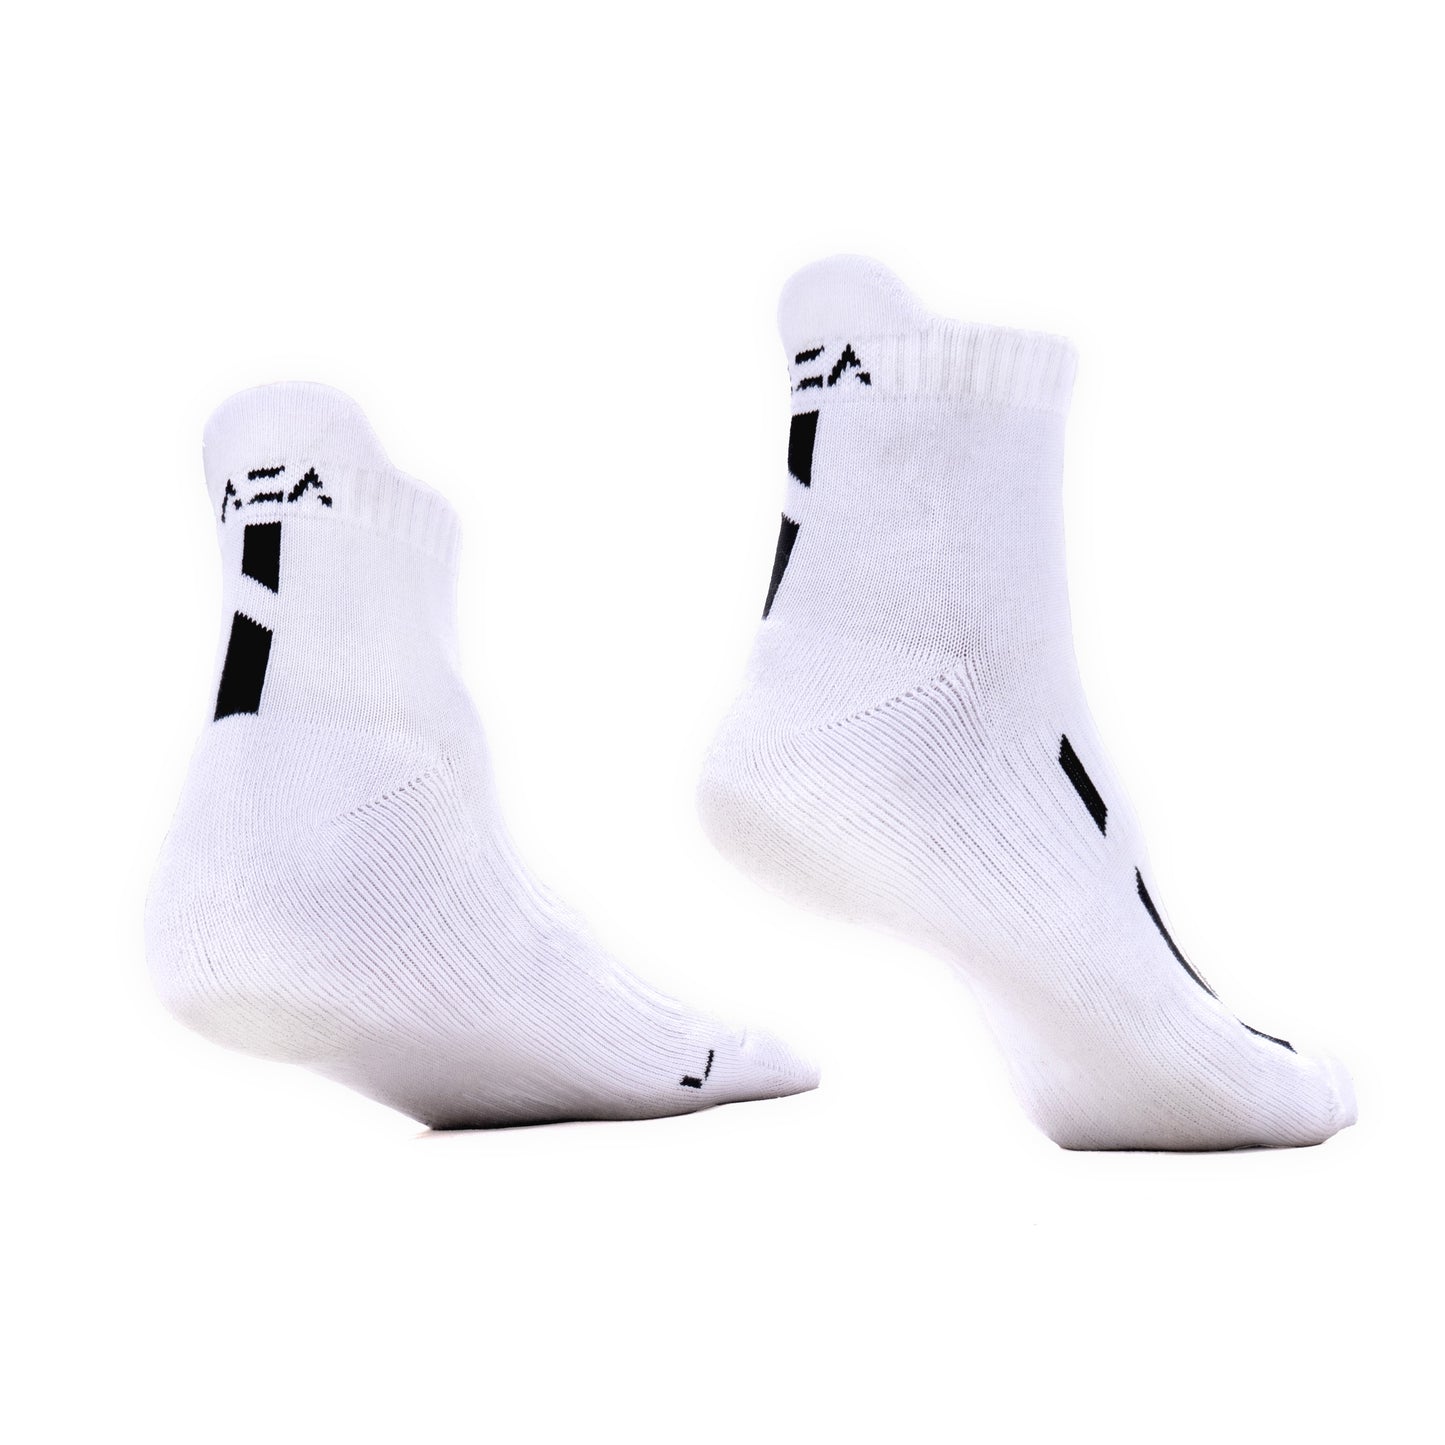 AZA Socks Ankle Performance II